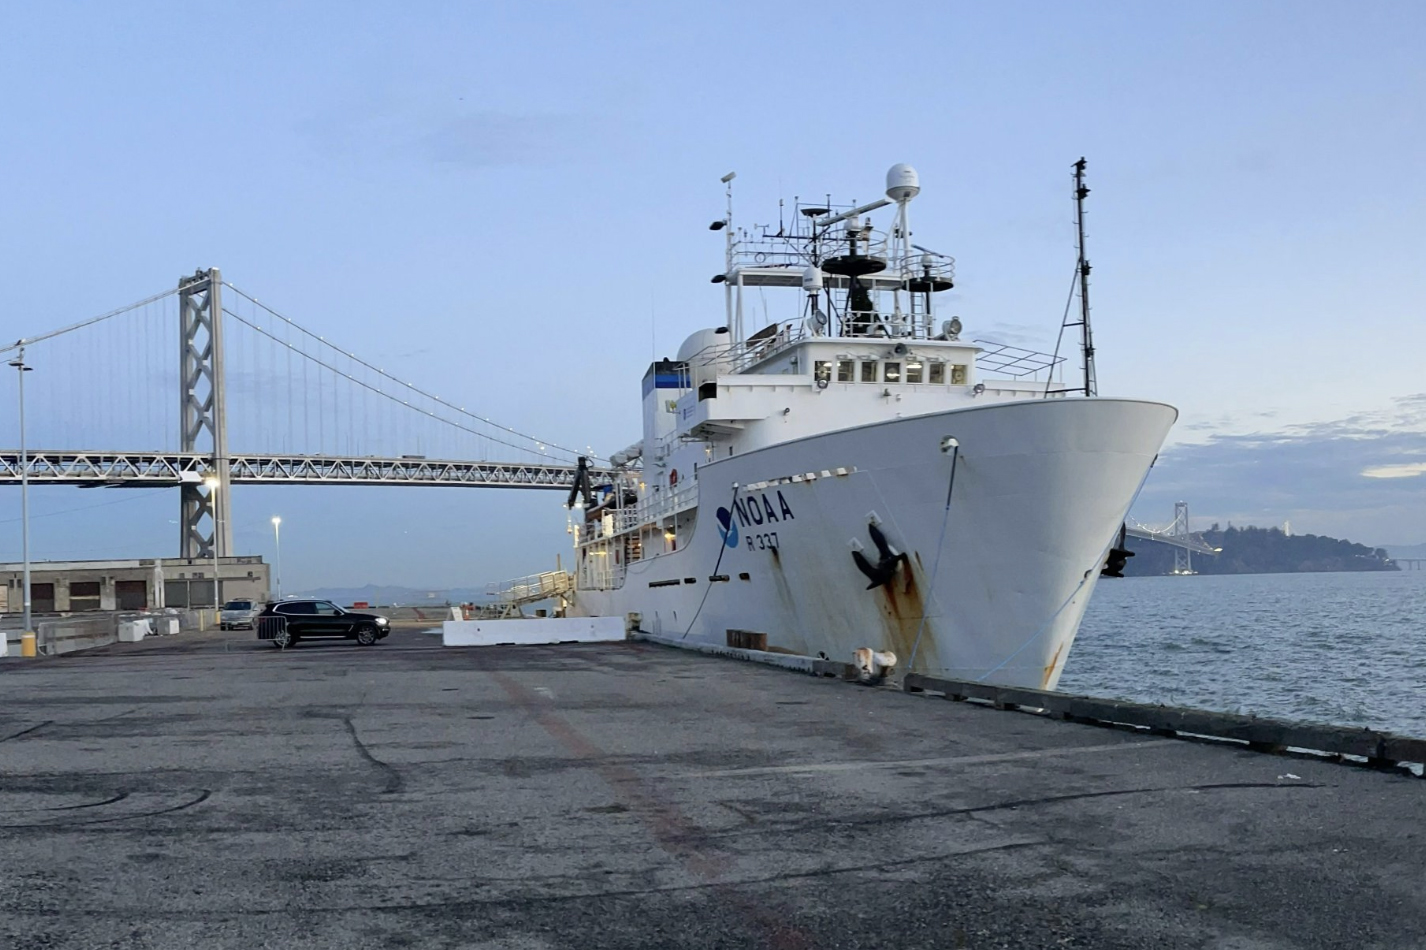 A view of the NOAAS Okeanos Explorer seen docked in the San Francisco Bay near the Bay Bridge in San Francisco.